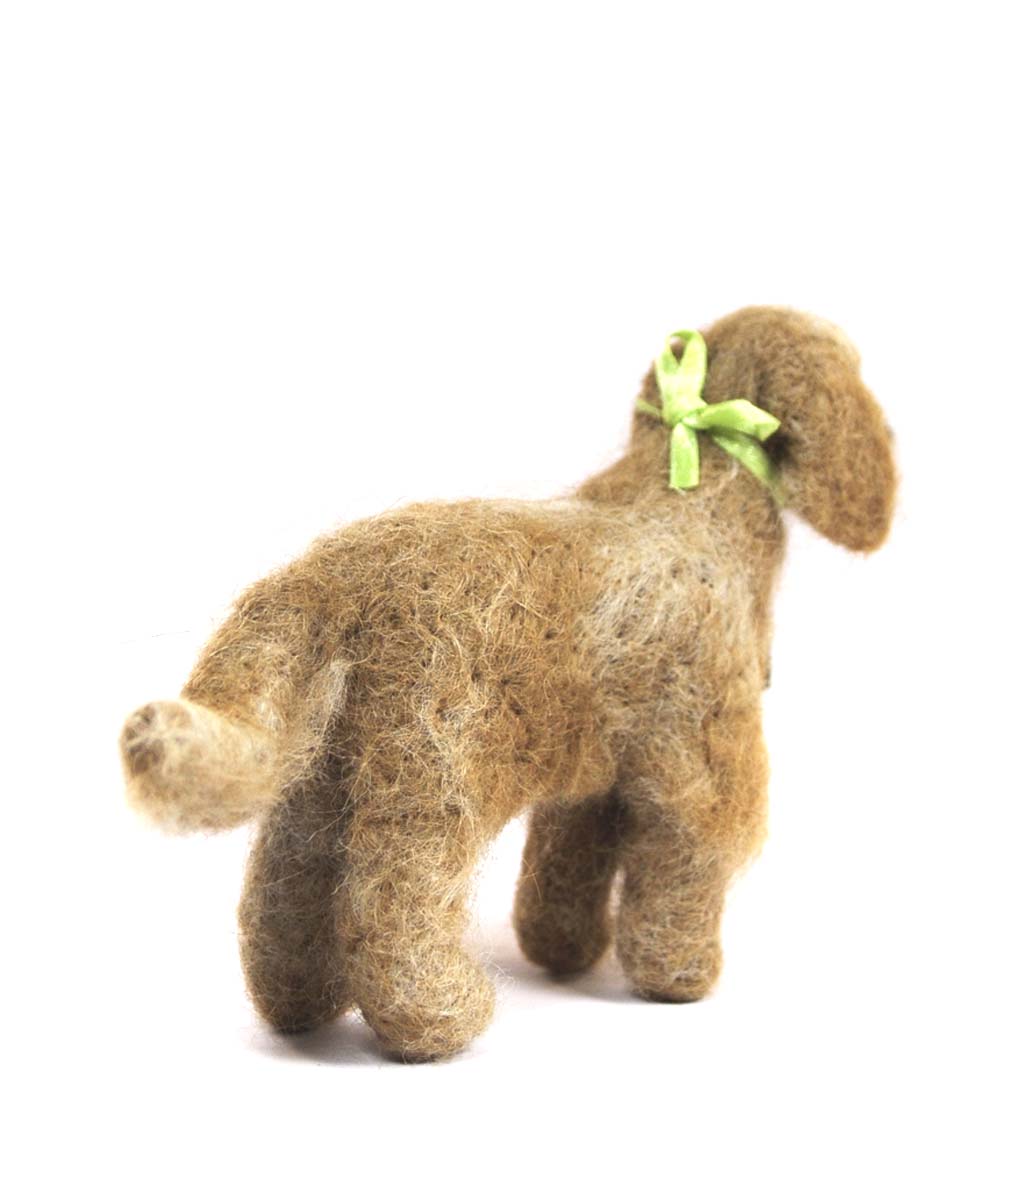 Golden Retriever Dog: Alpaca Fiber Sculpture